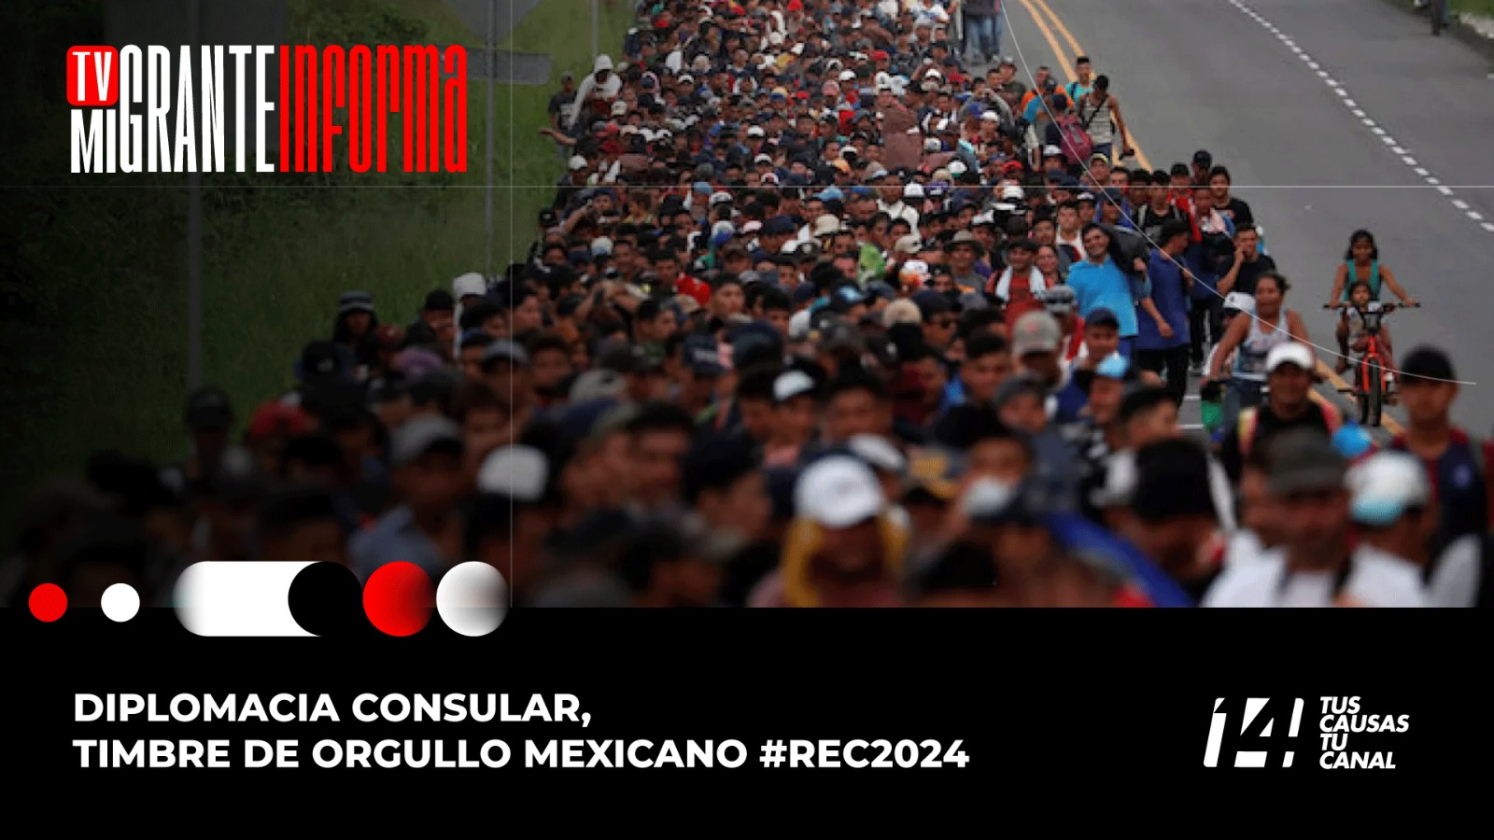 Diplomacia consular, timbre de orgullo mexicano #REC2024